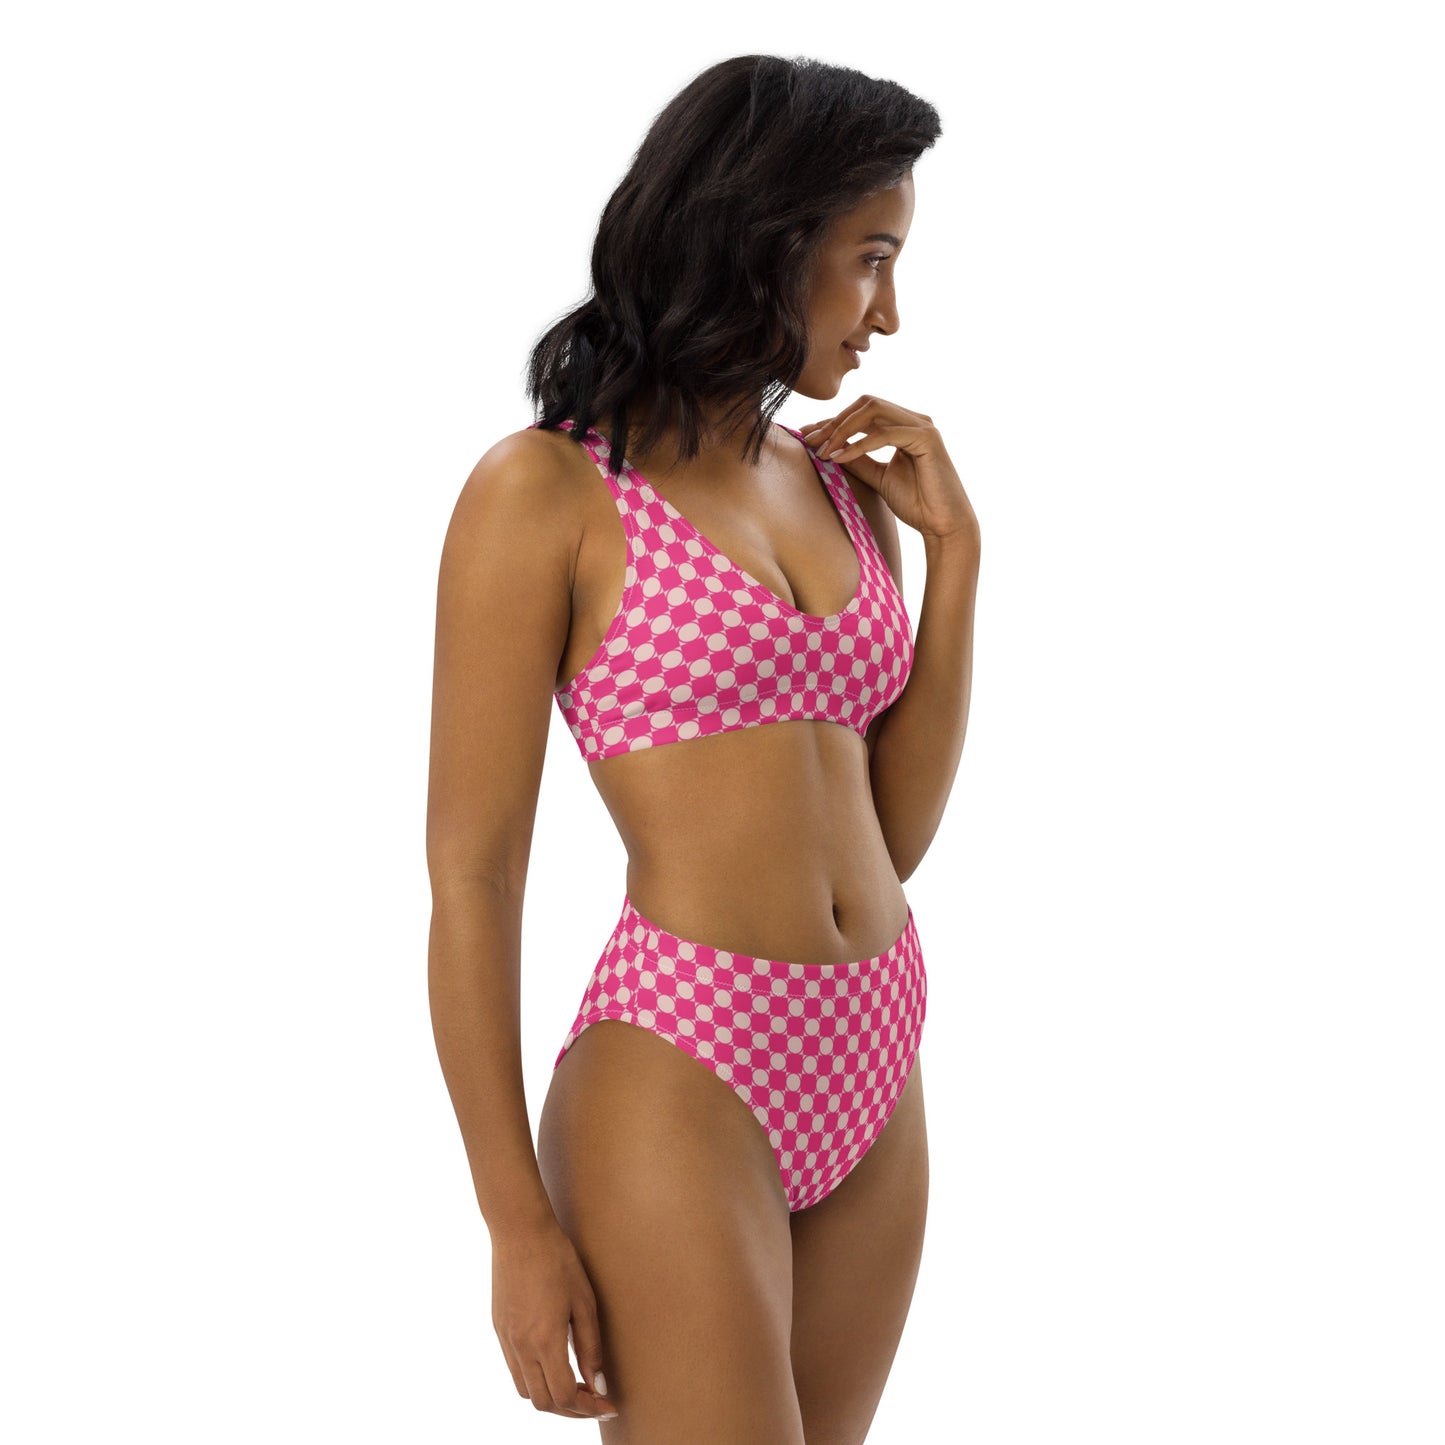 Checkered Recycled High Waisted Bikini